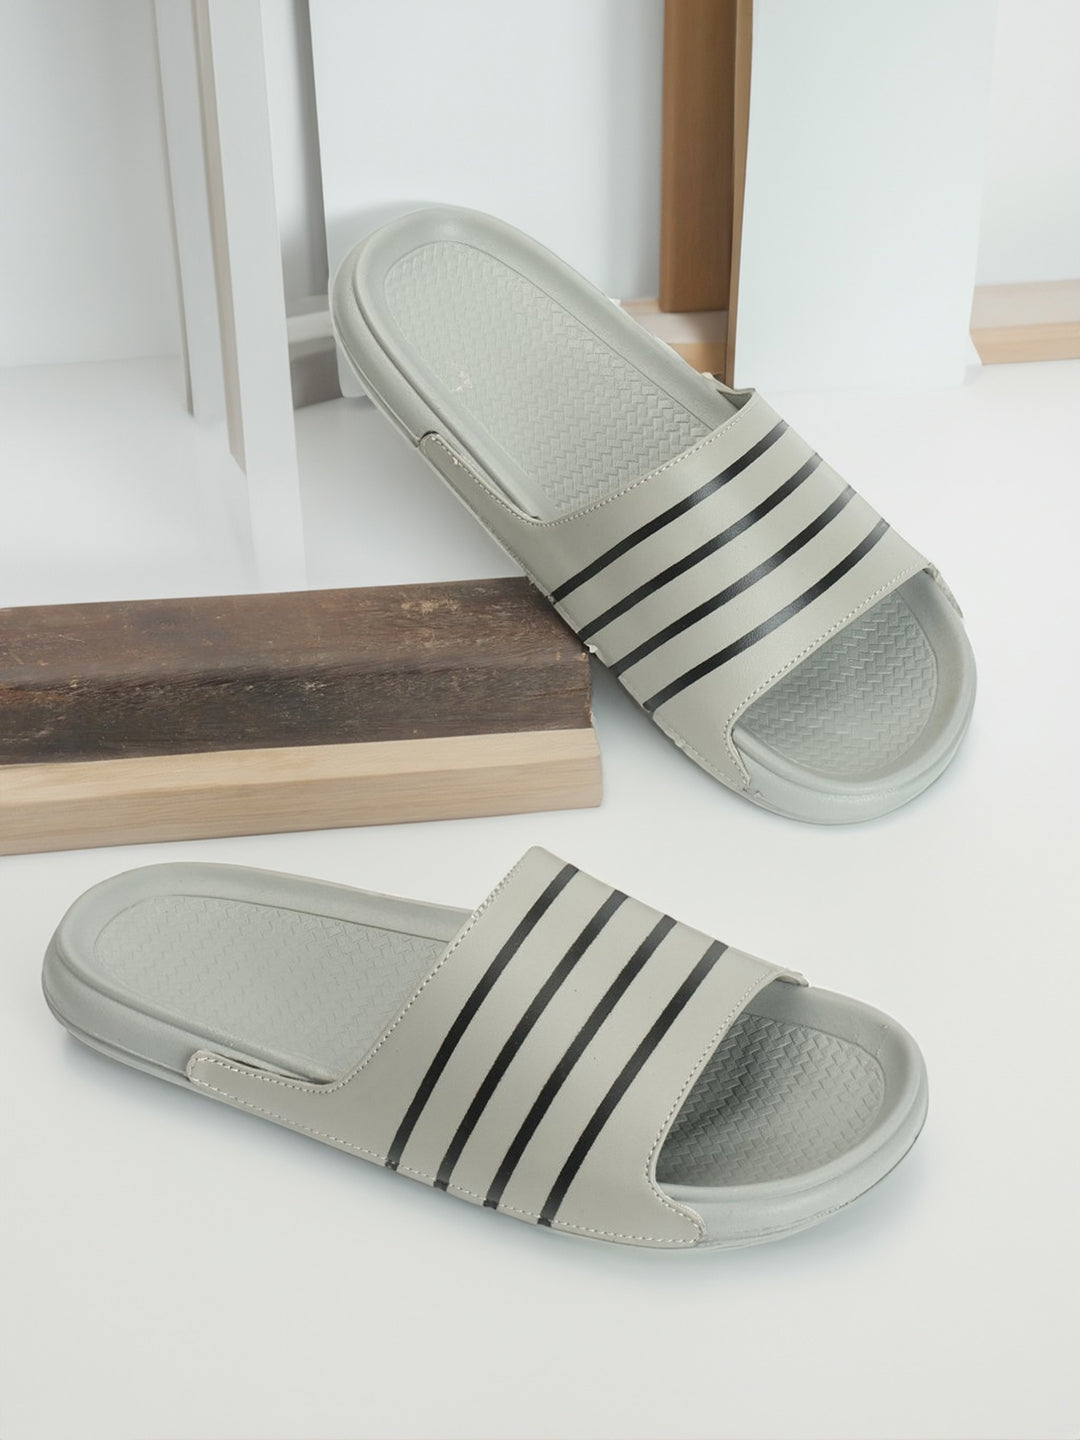 Closho Men's Premium Flip Flop & Sliders